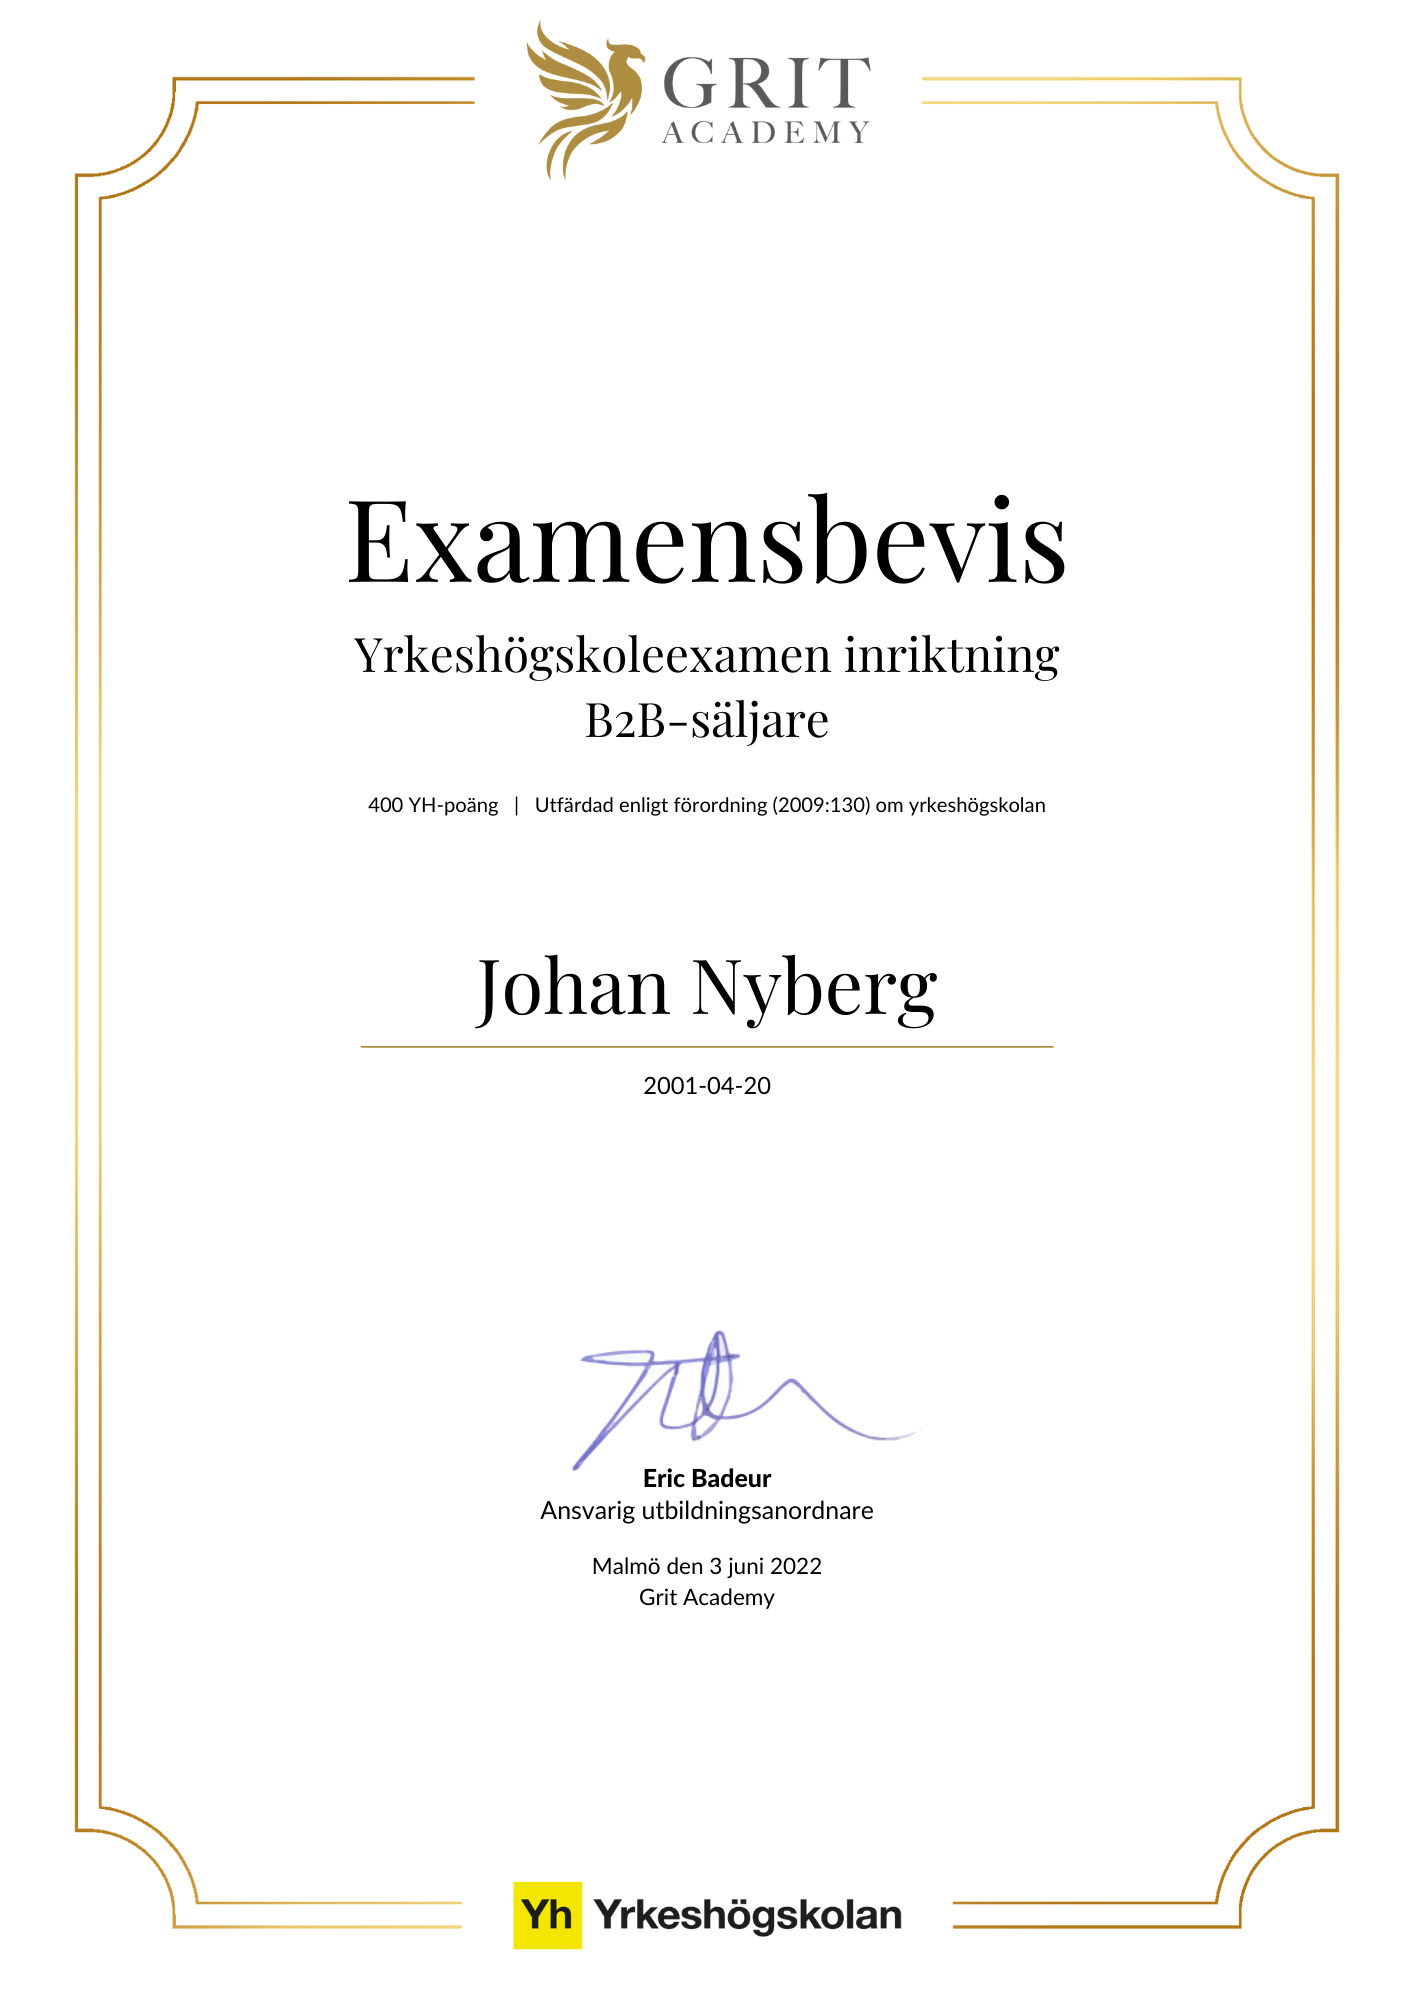 Examensbevis Johan Nyberg